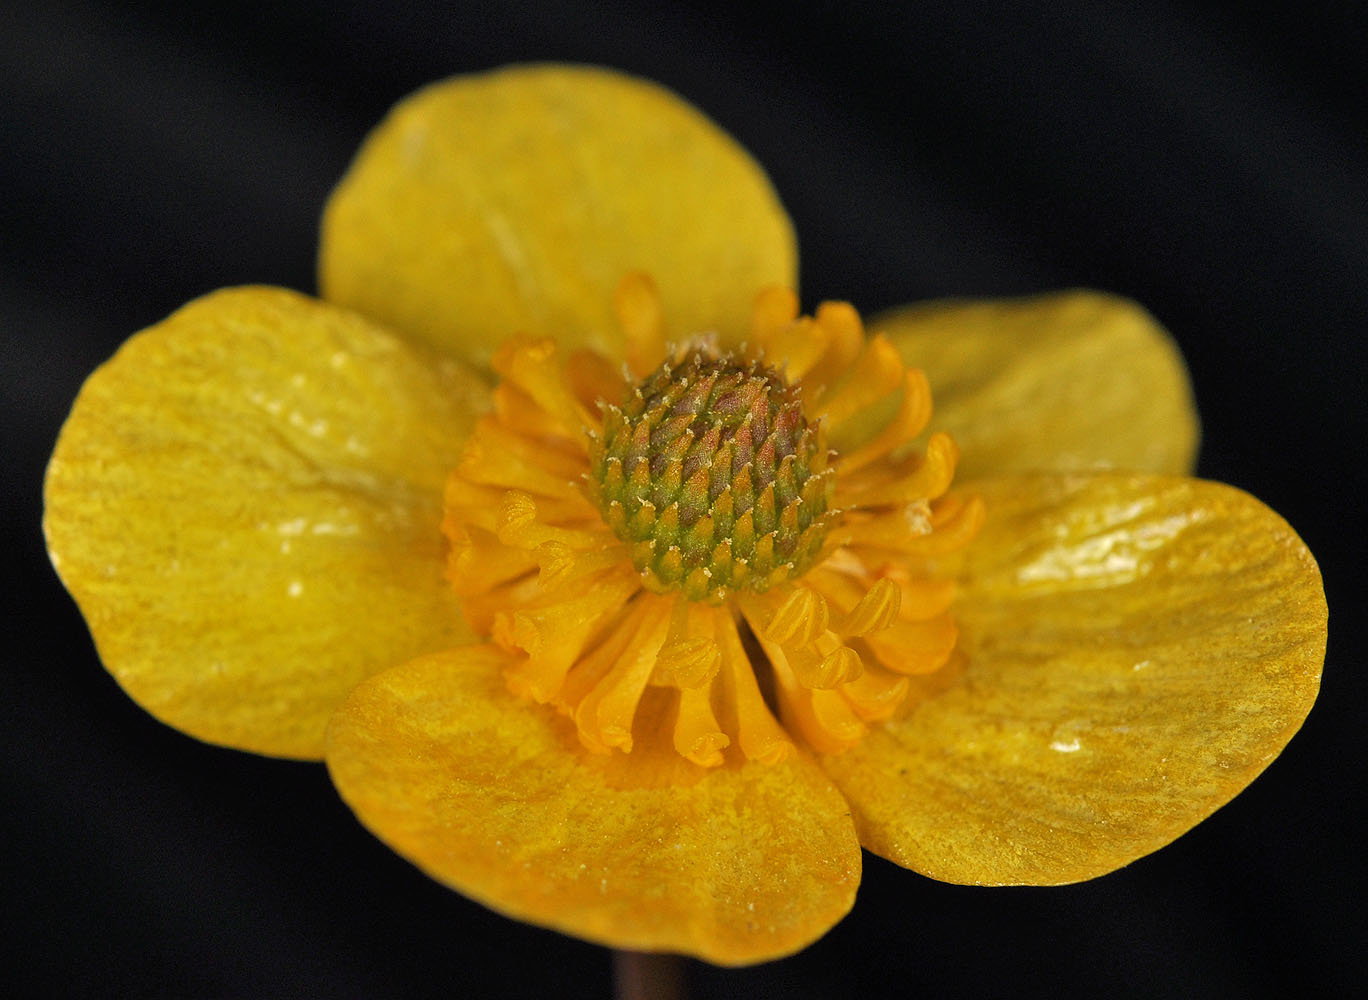 Flora of Eastern Washington Image: Ranunculus glaberrimus glaberrimus